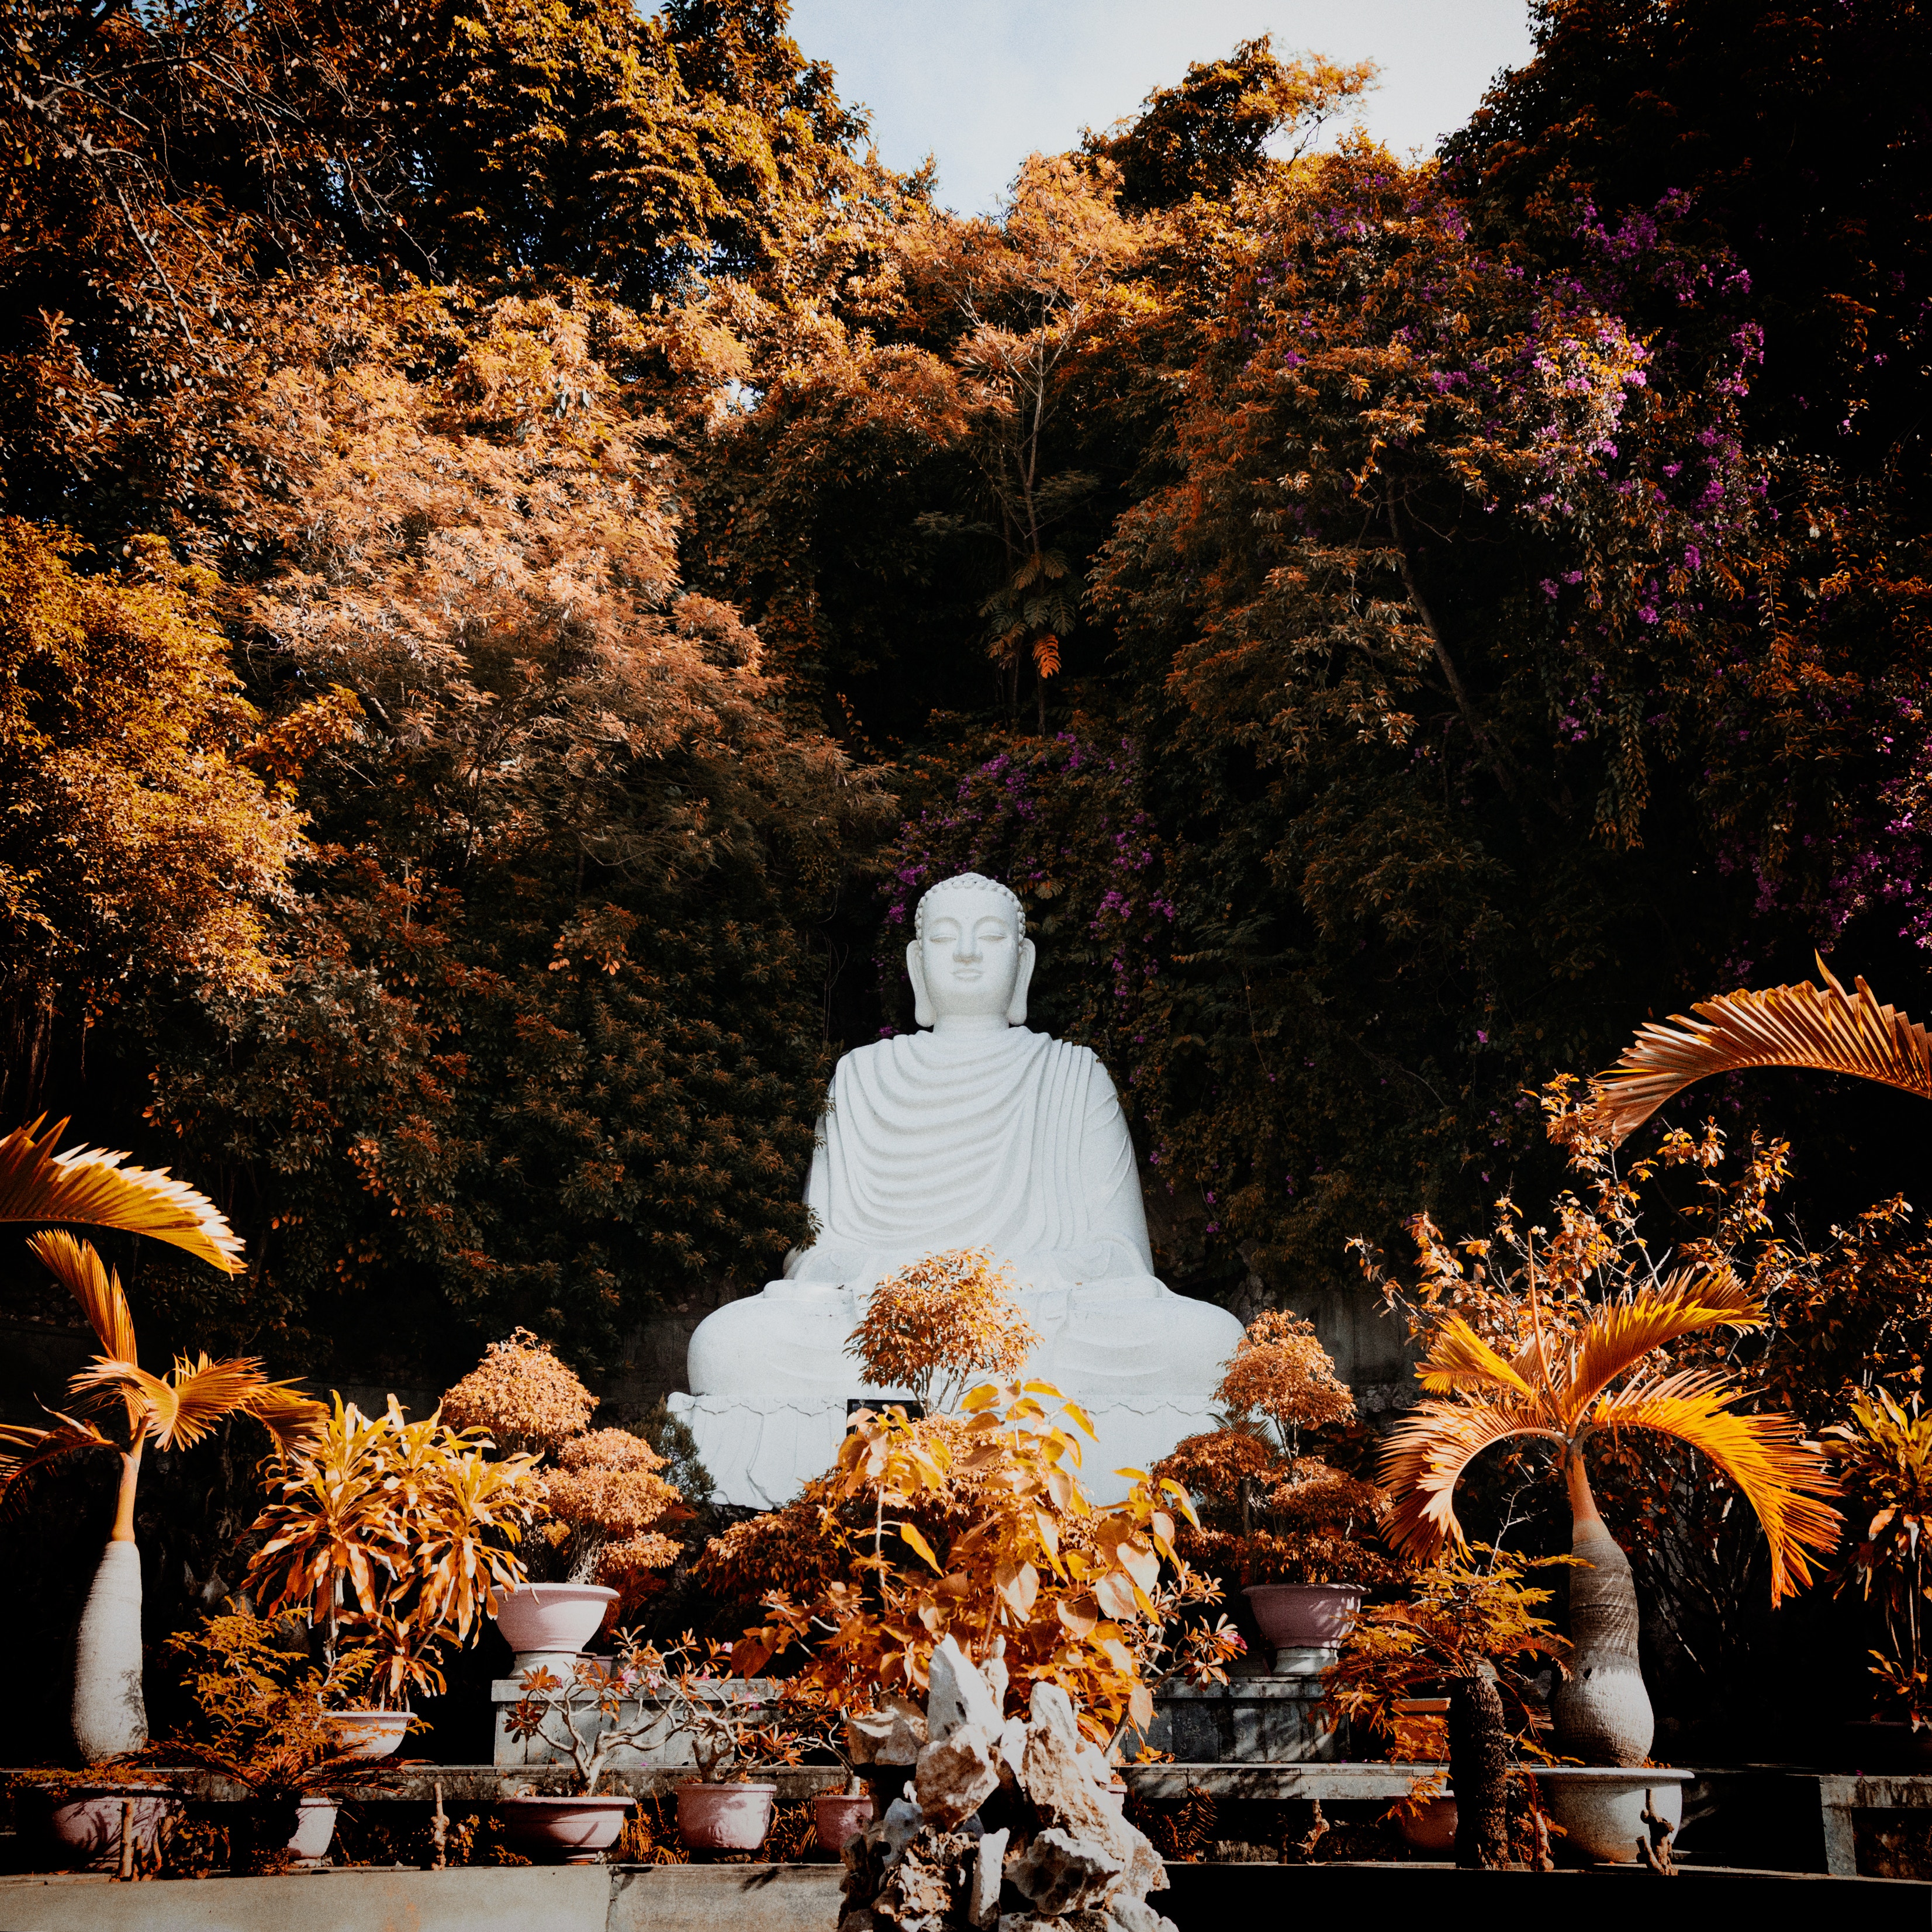 buddha, miscellanea, plants, trees, miscellaneous, buddhism, sculpture, harmony